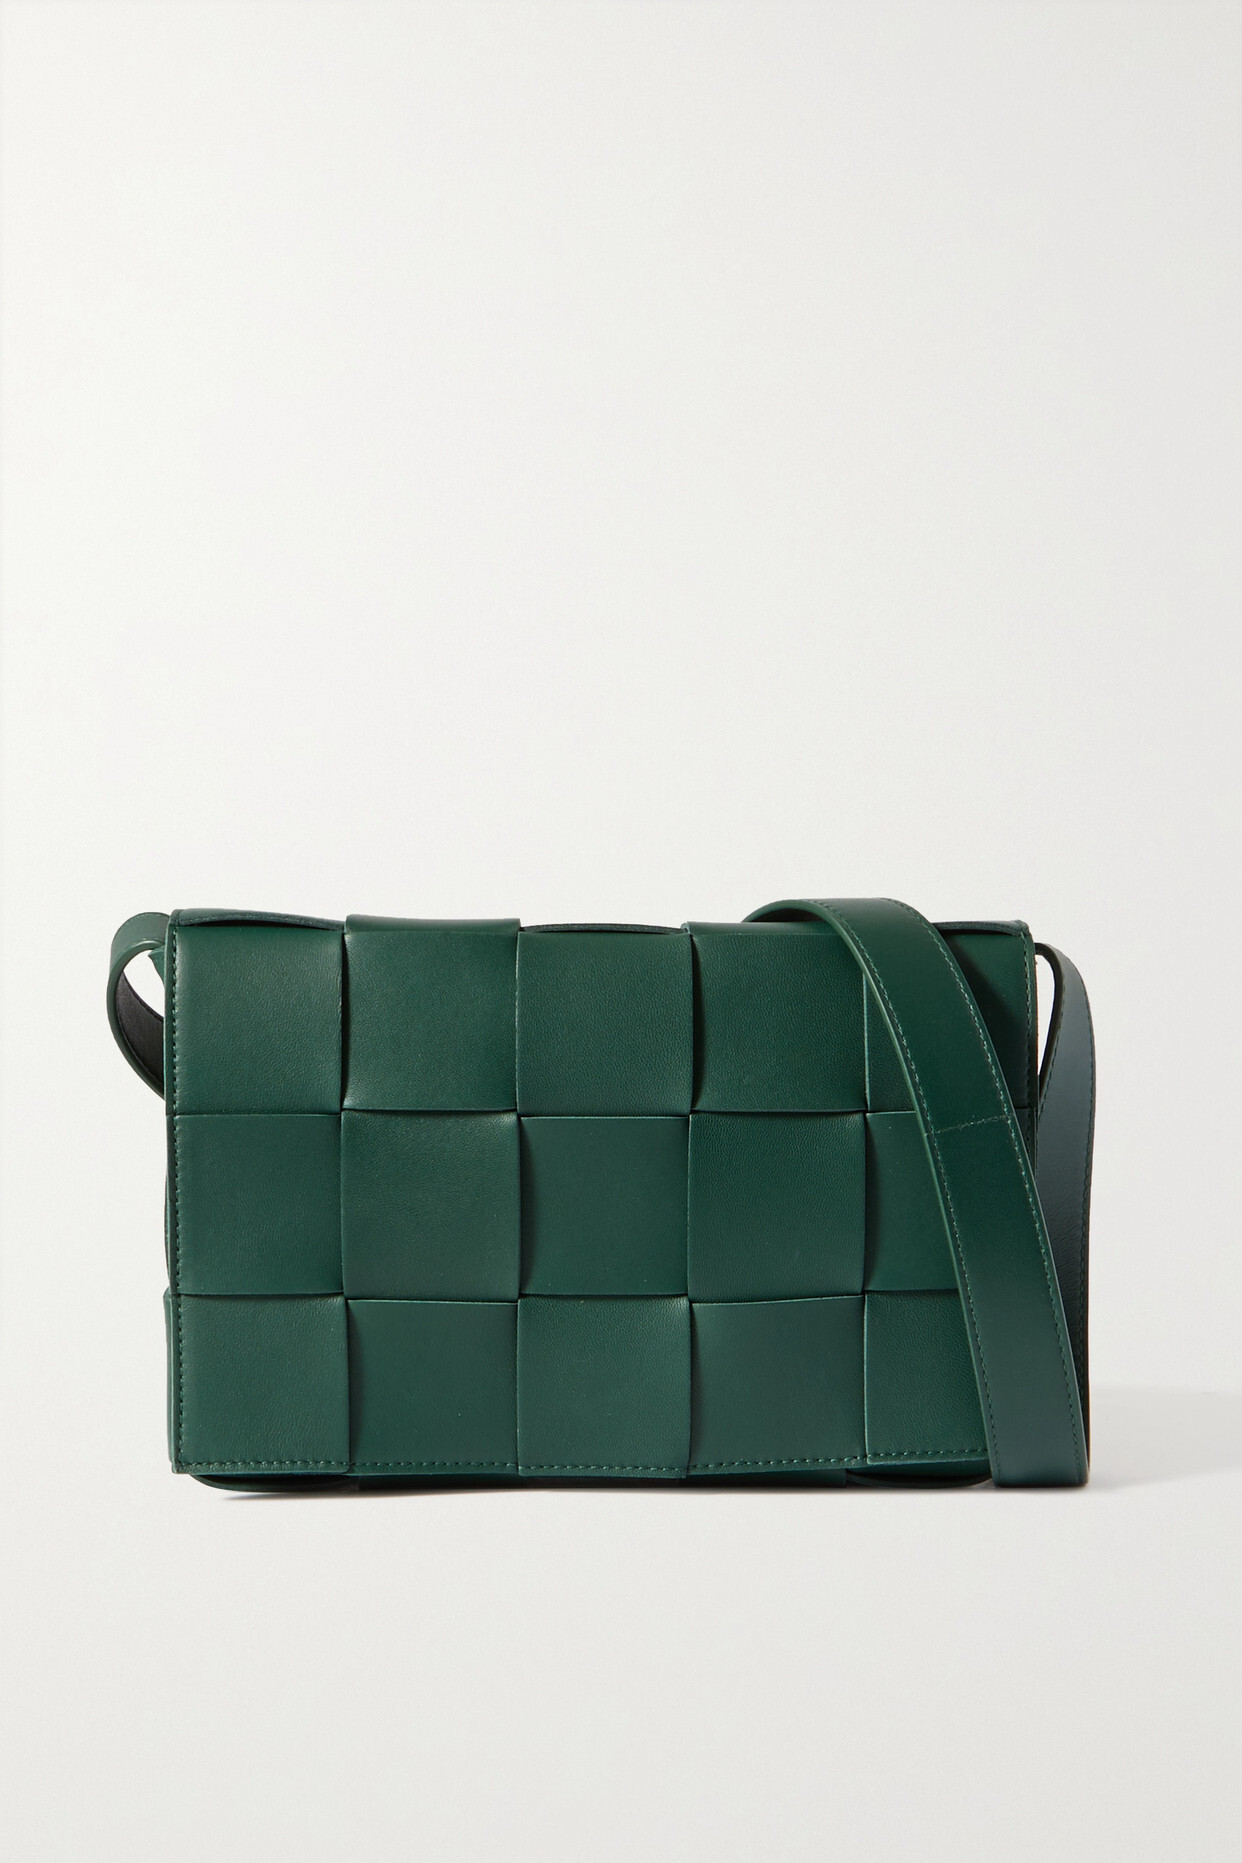 Bottega Veneta - Cassette Intrecciato Leather Shoulder Bag - Green